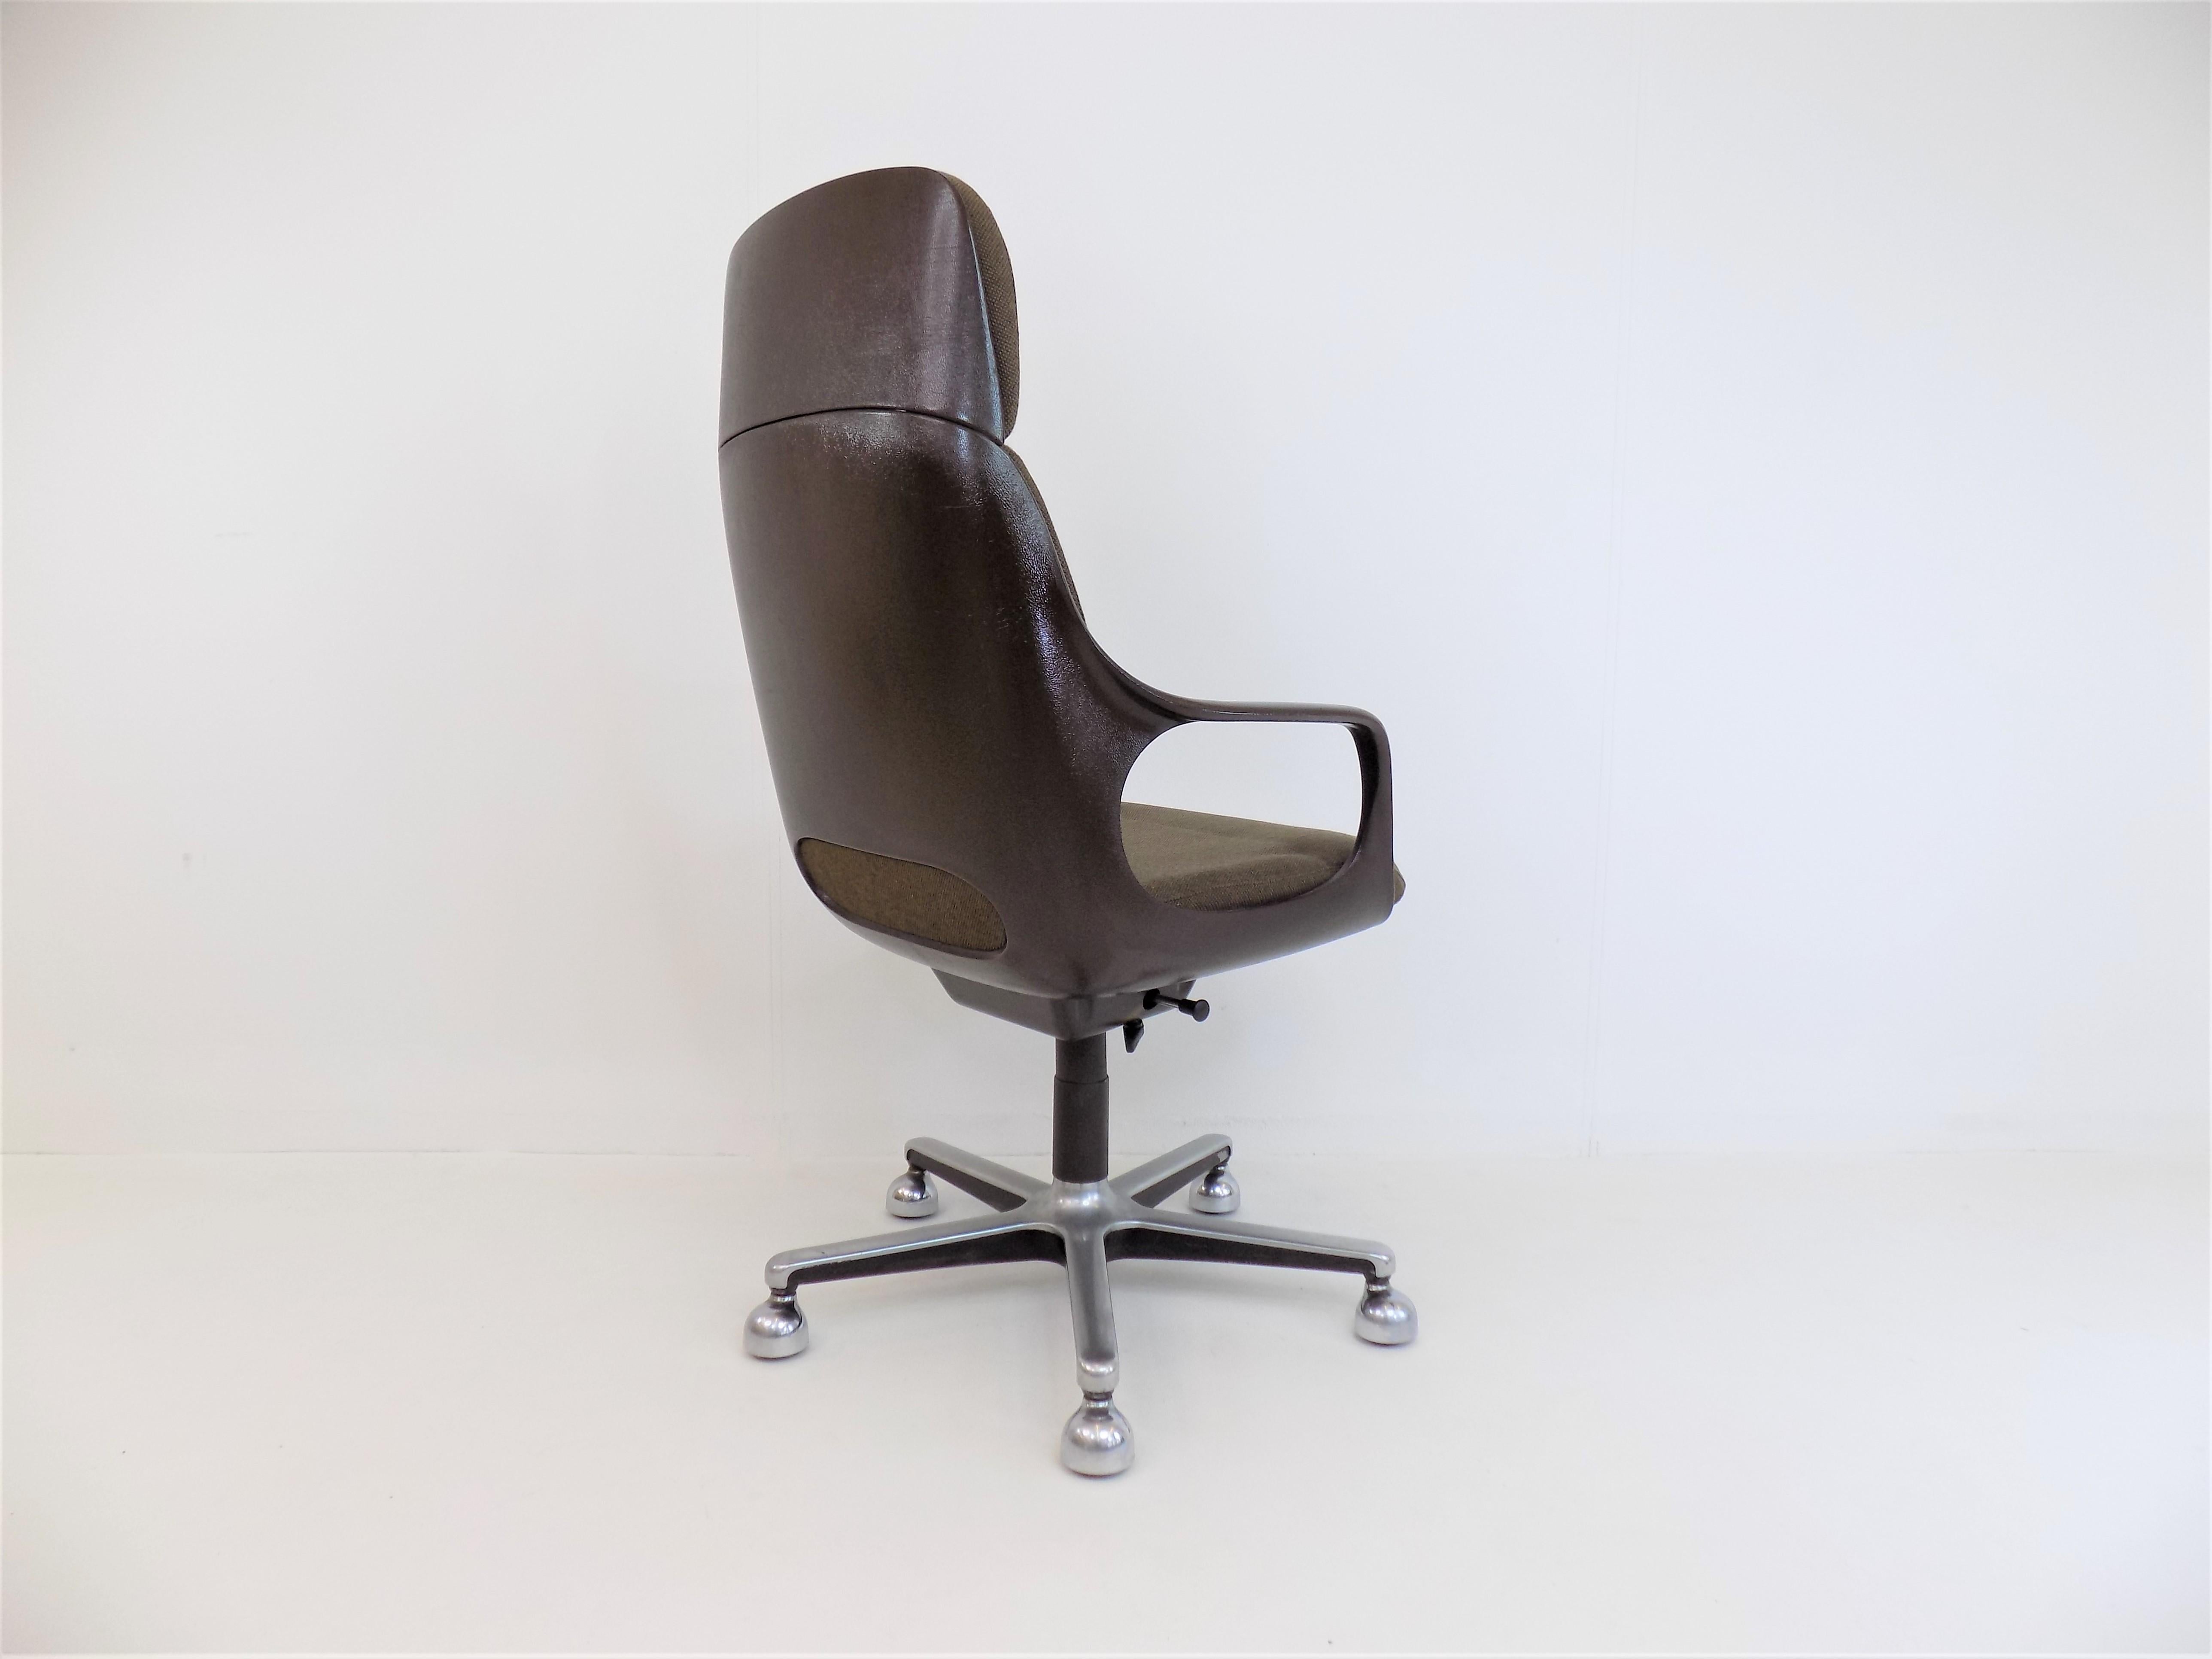 Fabric Drabert Concept Office Chair